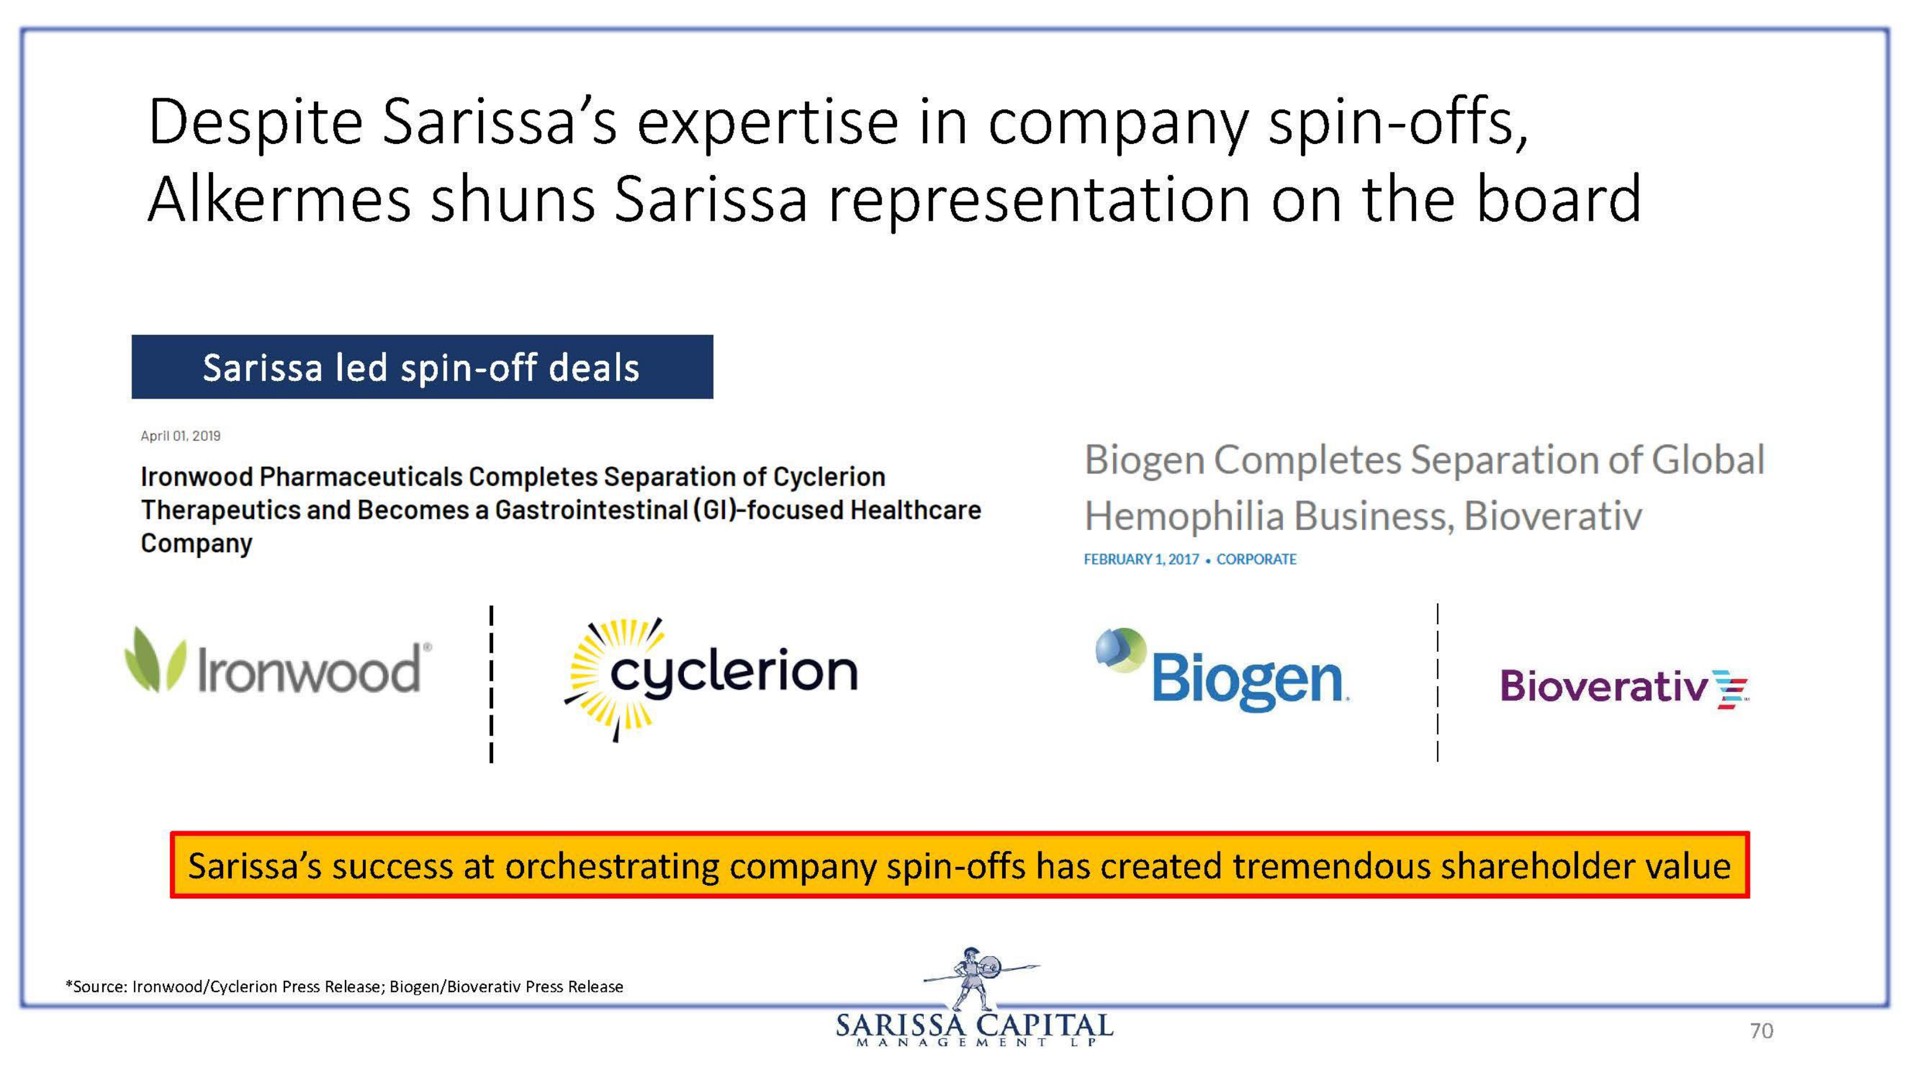 alkermes shuns representation on the board ironwood | Sarissa Capital